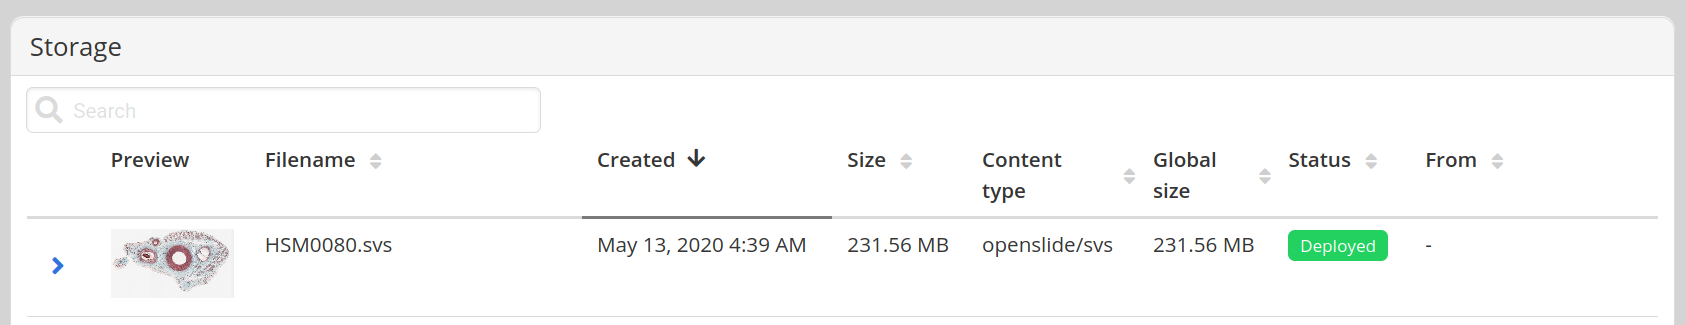 HSM0080.svs file in storage after successfull upload